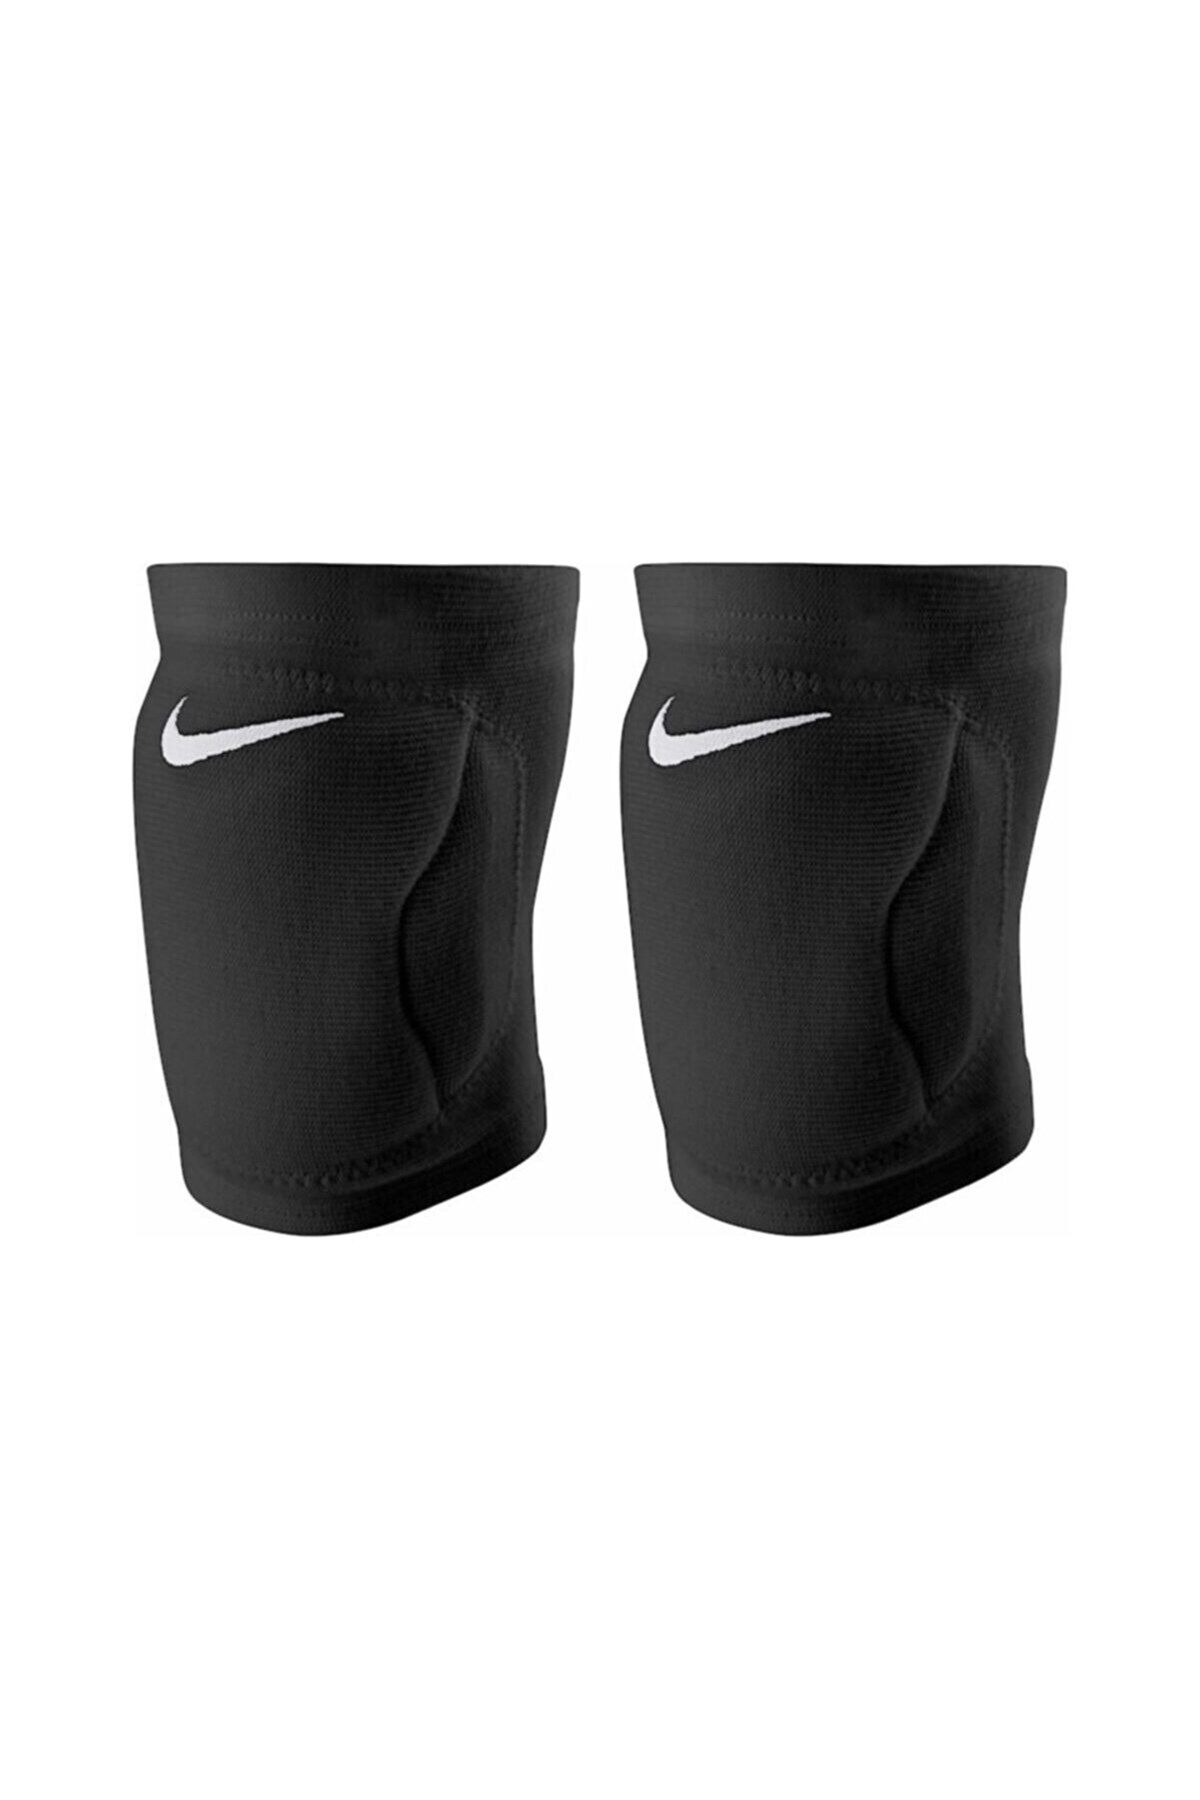 Nike Streak Volleyball Knee Pads Ce 2 Pk Unisex Voleybol Dizliği N.vp.07.001-siyah